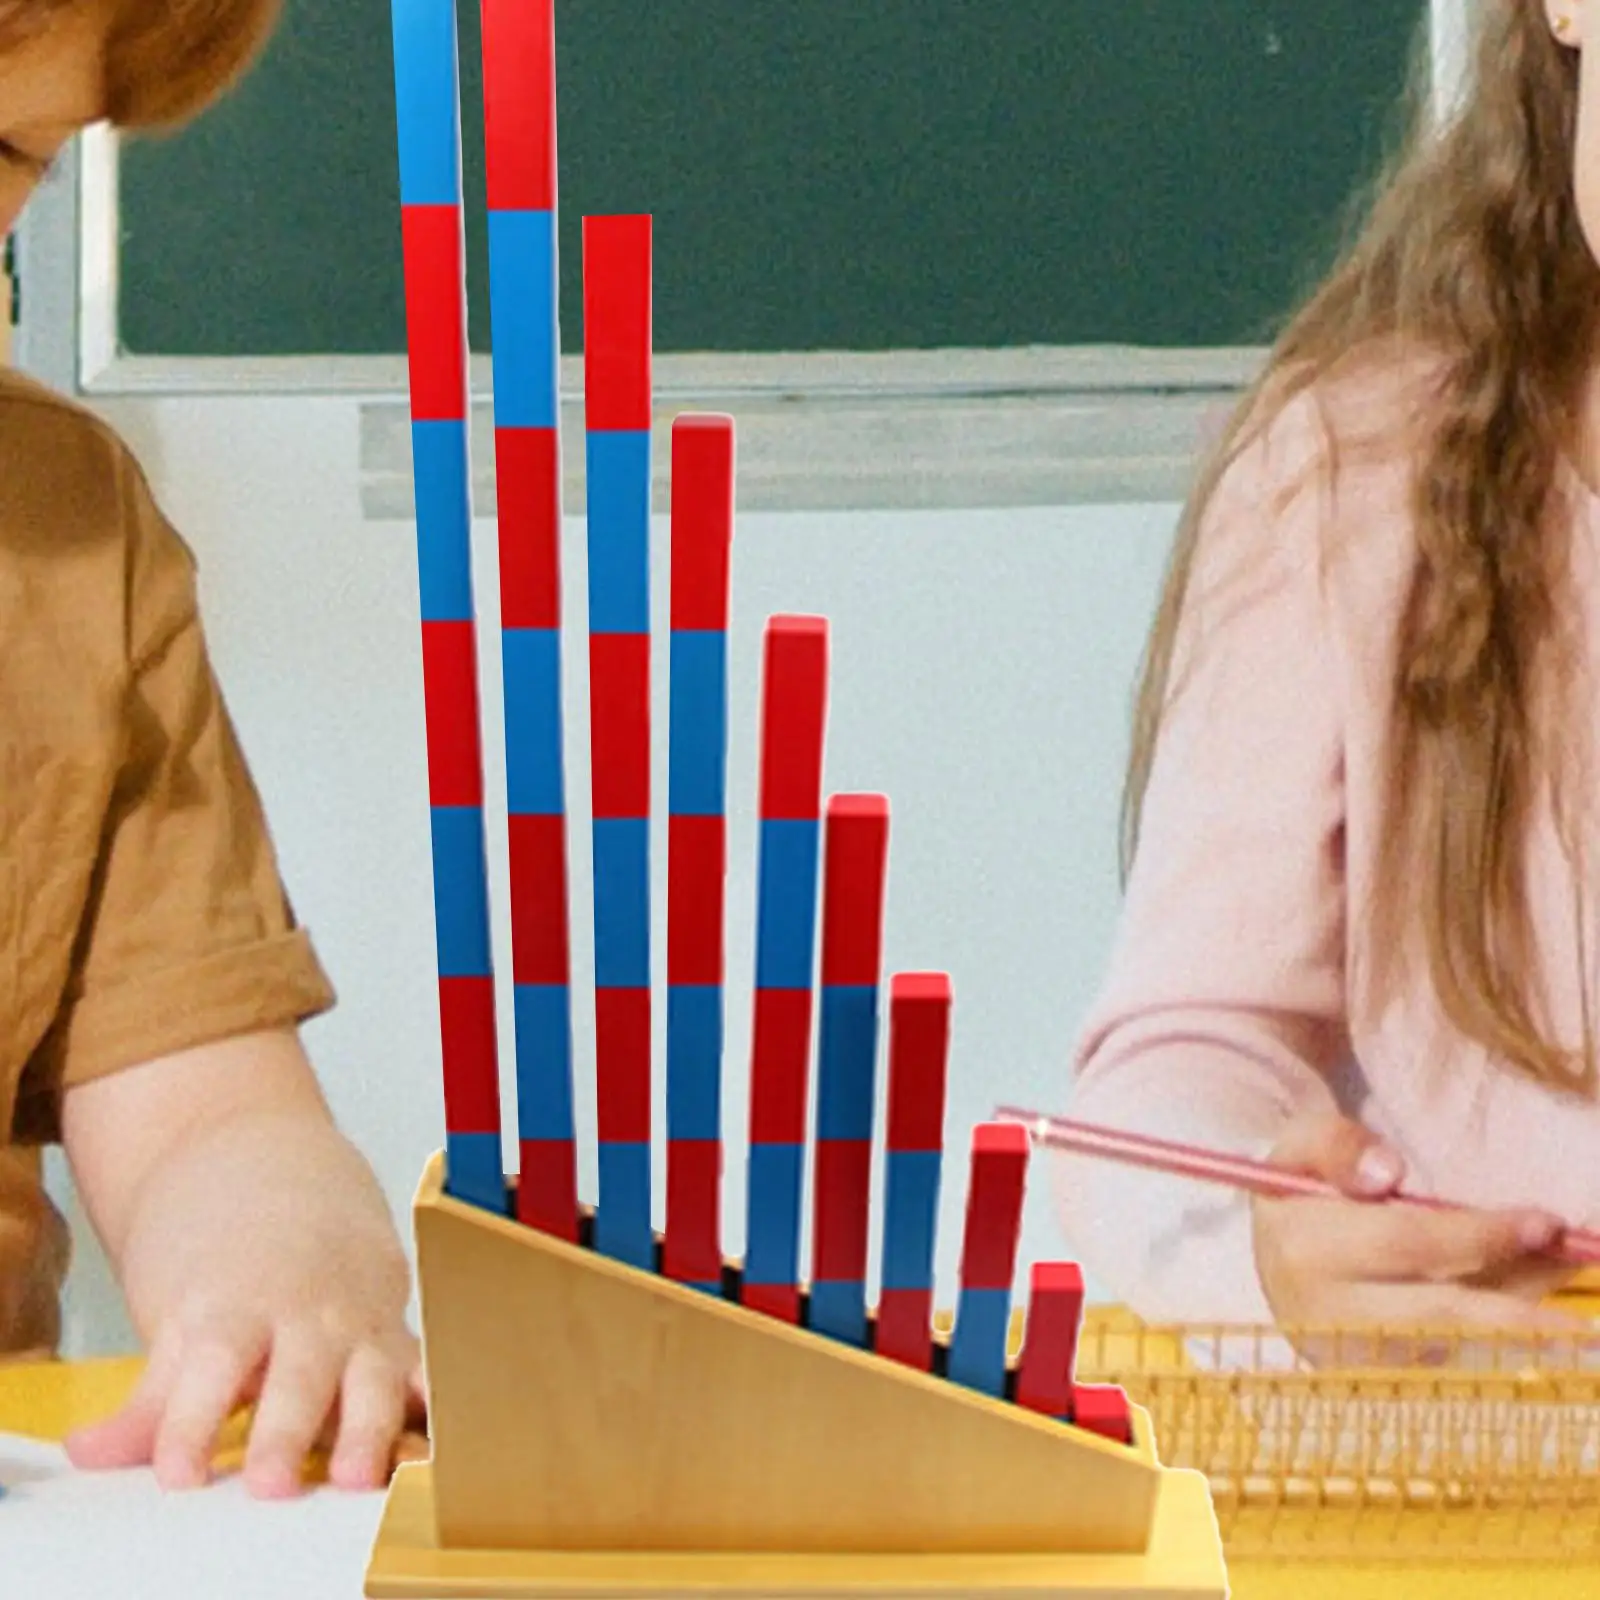 Wooden Montessori Rods Stand Numerical Teaching Aids for Homeschool Children